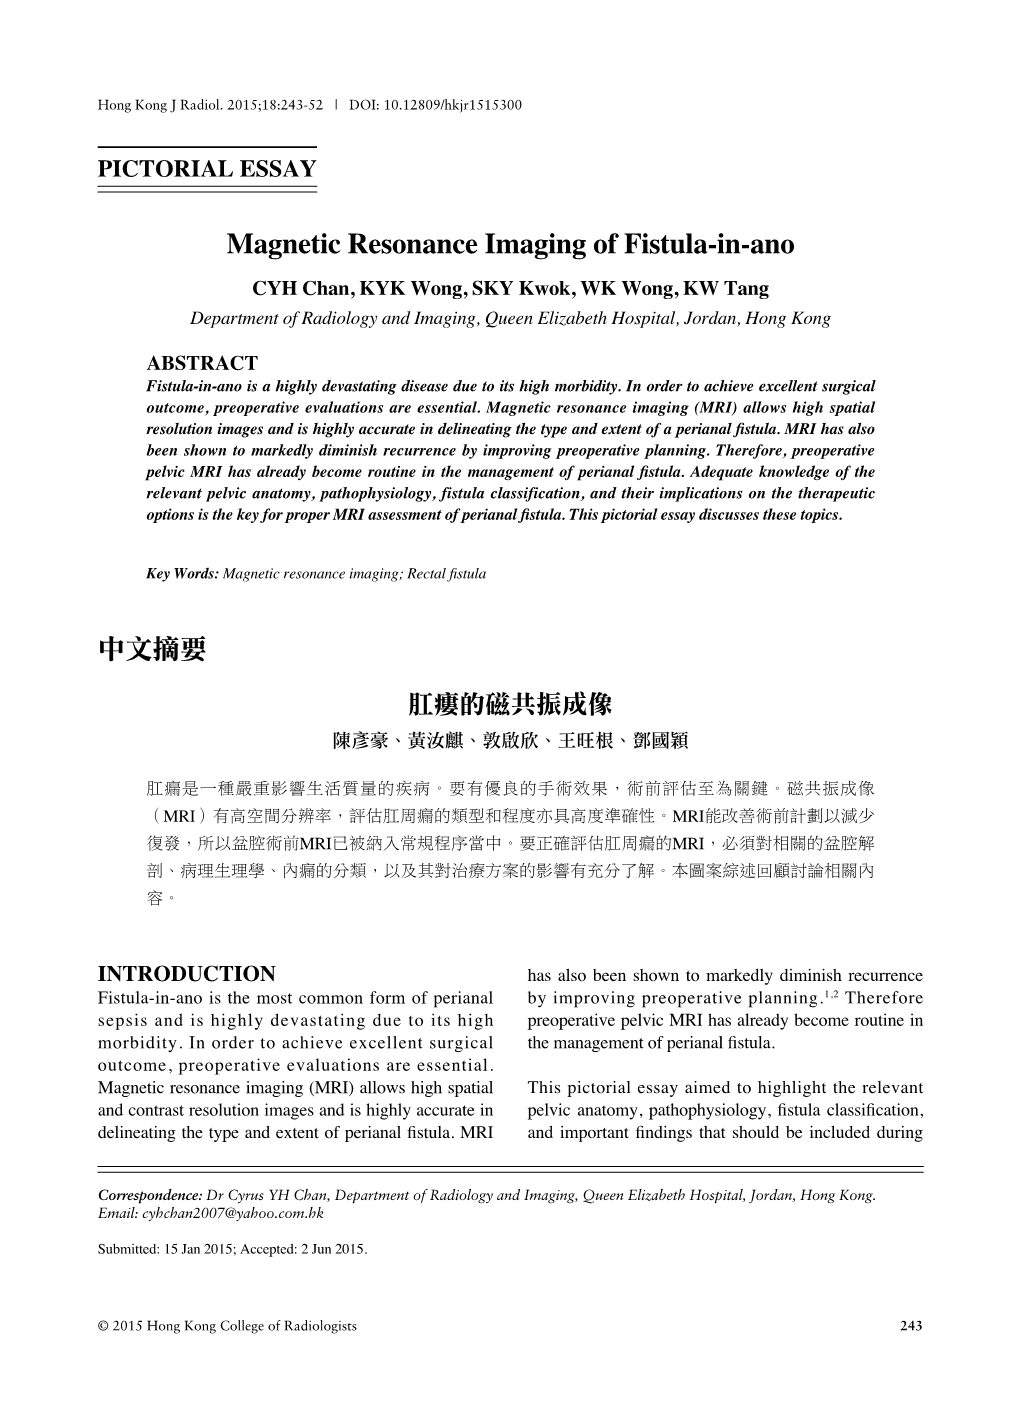 Magnetic Resonance Imaging of Fistula-In-Ano